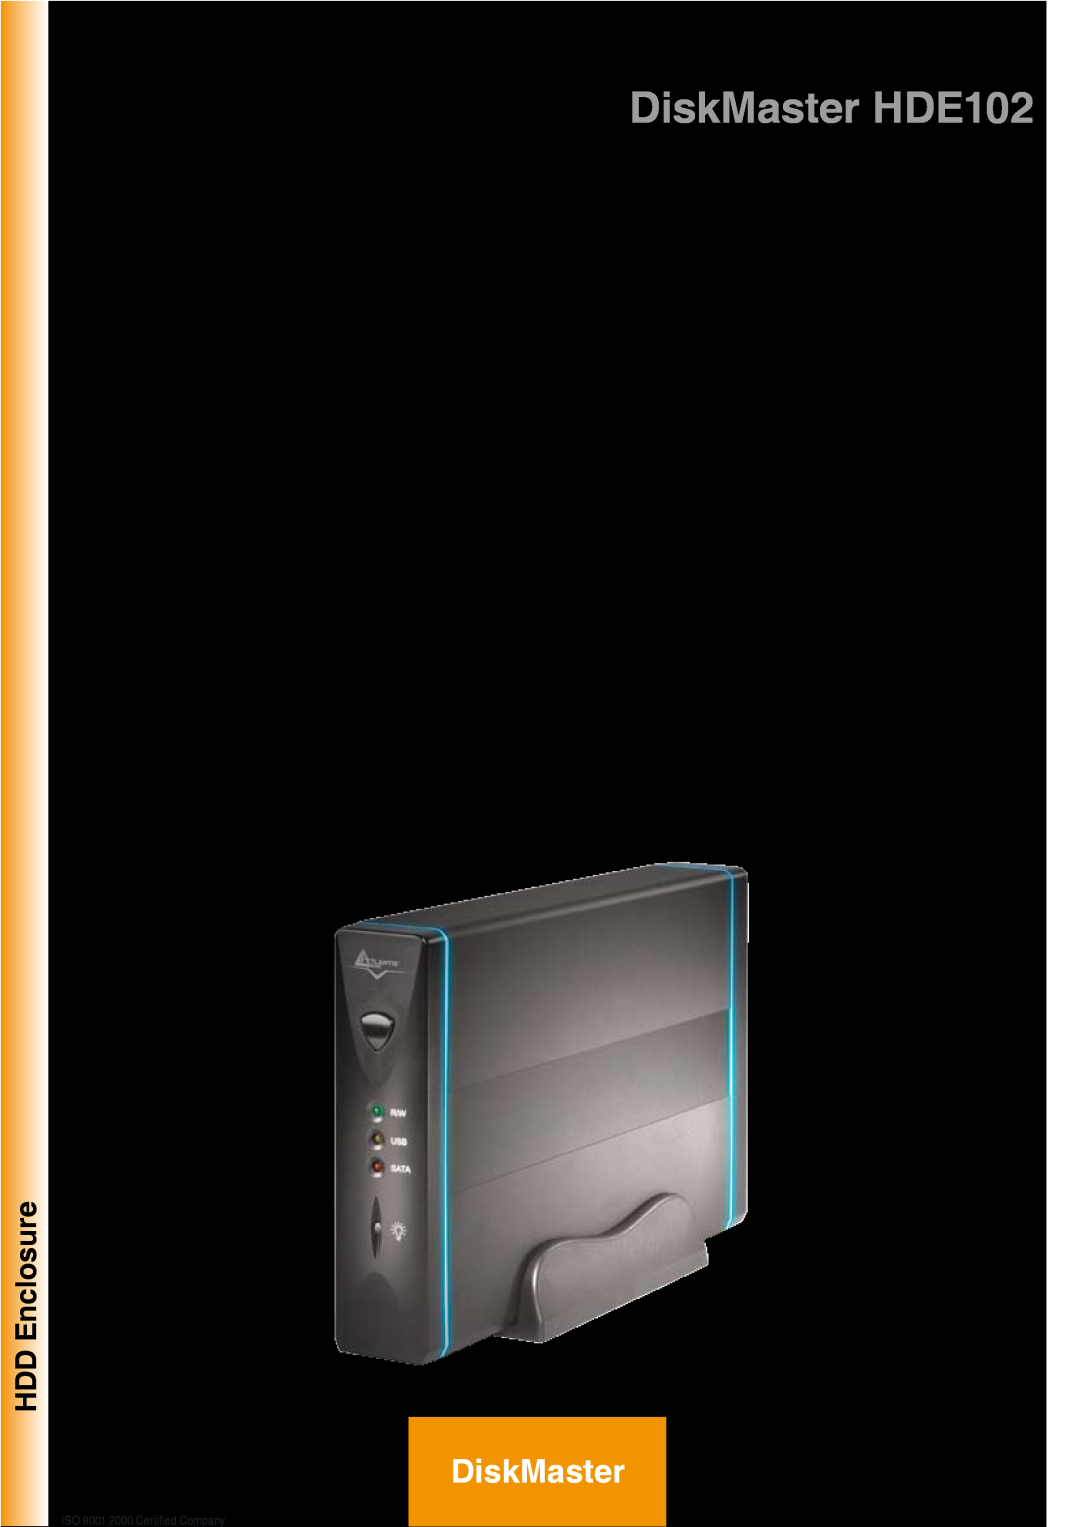 Atlantis Land manual DiskMaster HDE102, Storage Device, HDD Enclosure, A06-HDE1023,5” SATA 